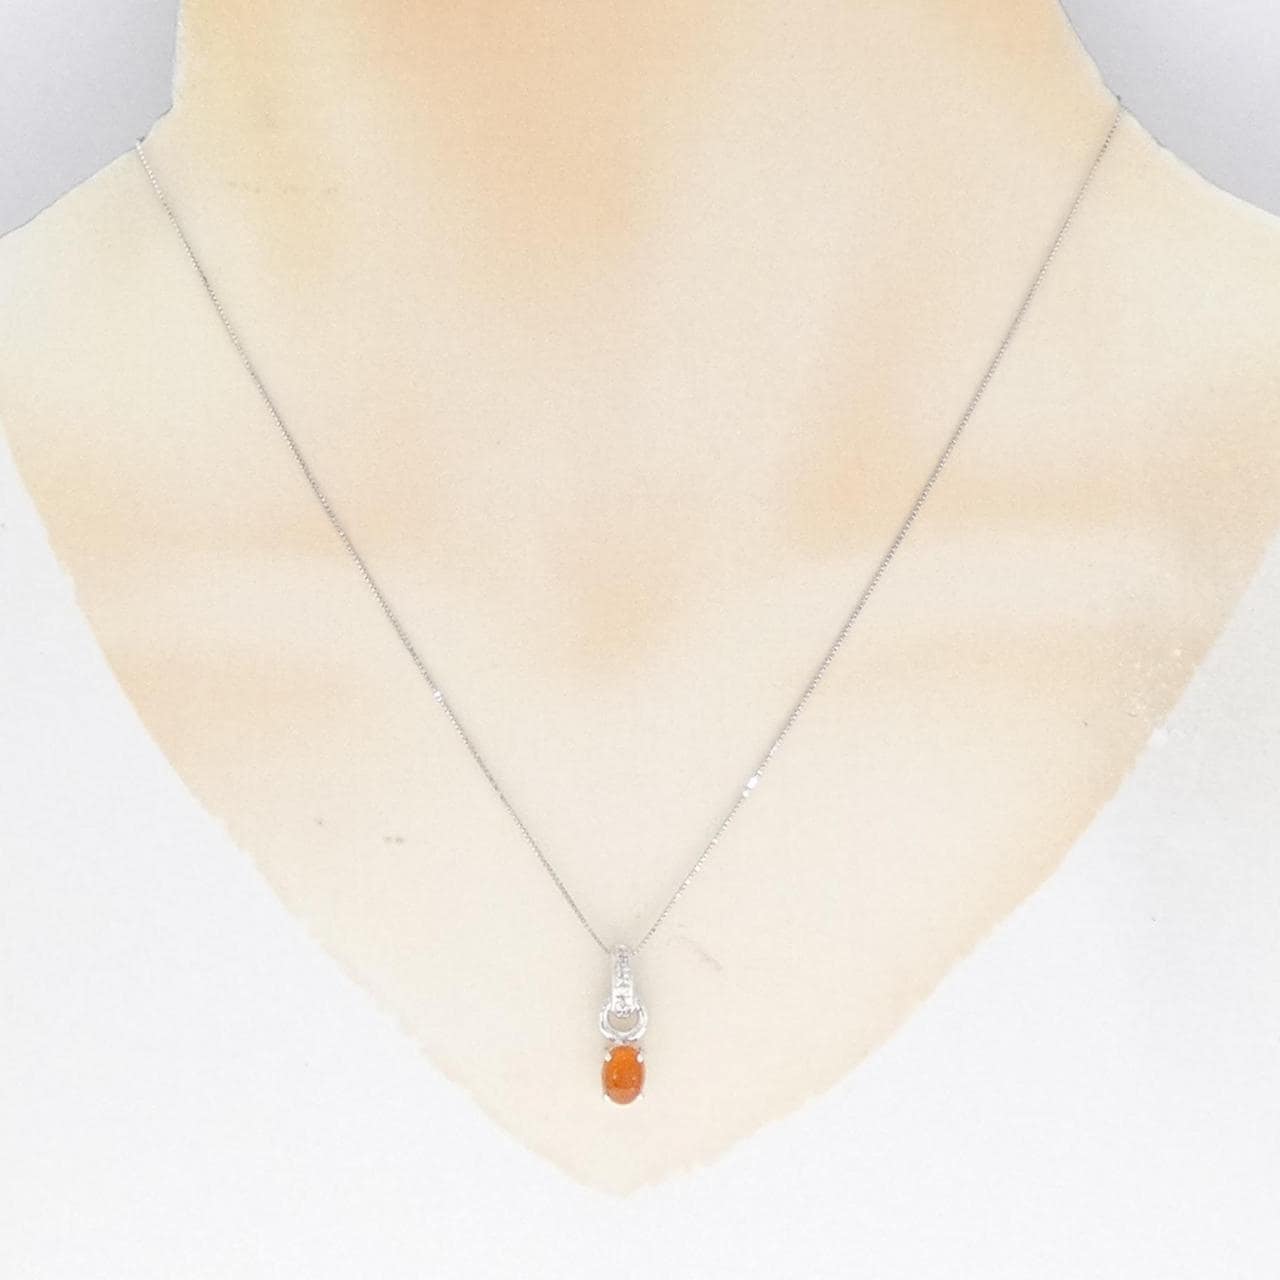 K18WG OPAL necklace 0.53CT